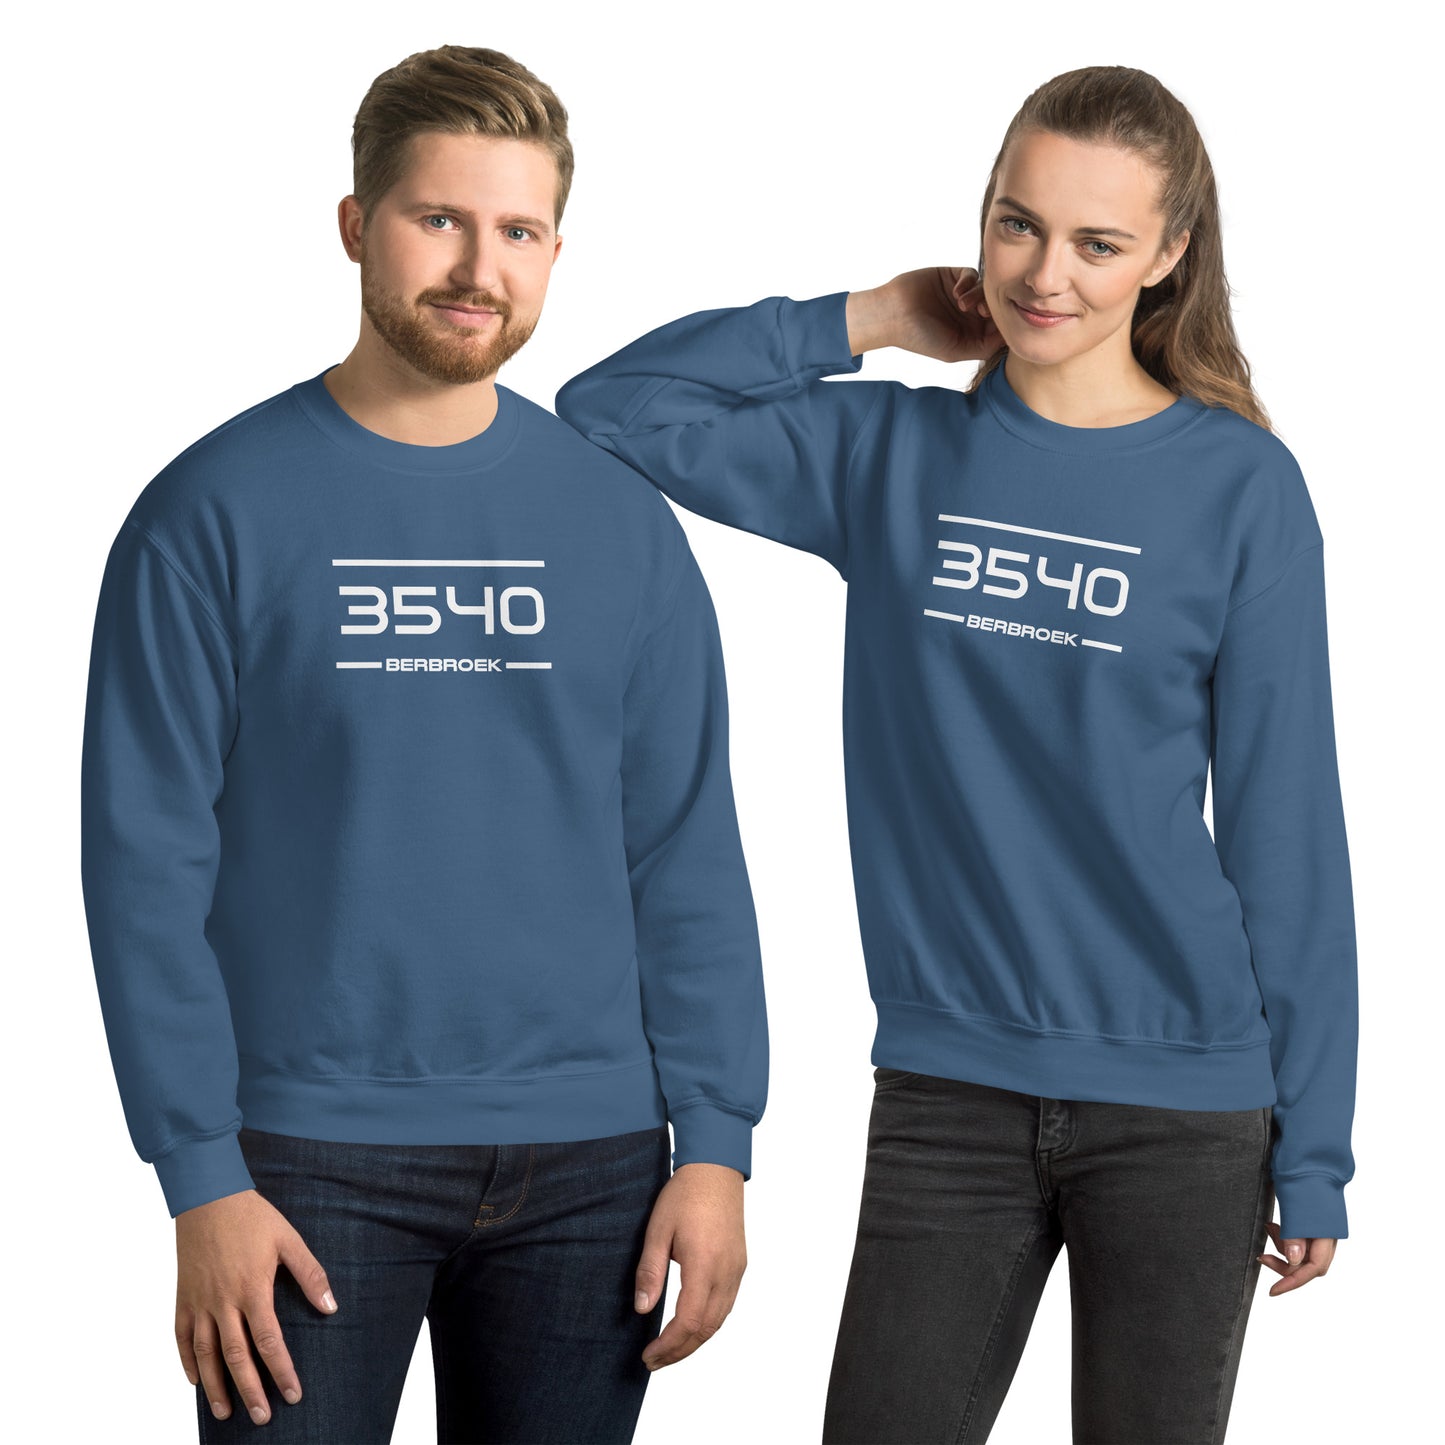 Sweater - 3540 - Berbroek (M/V)